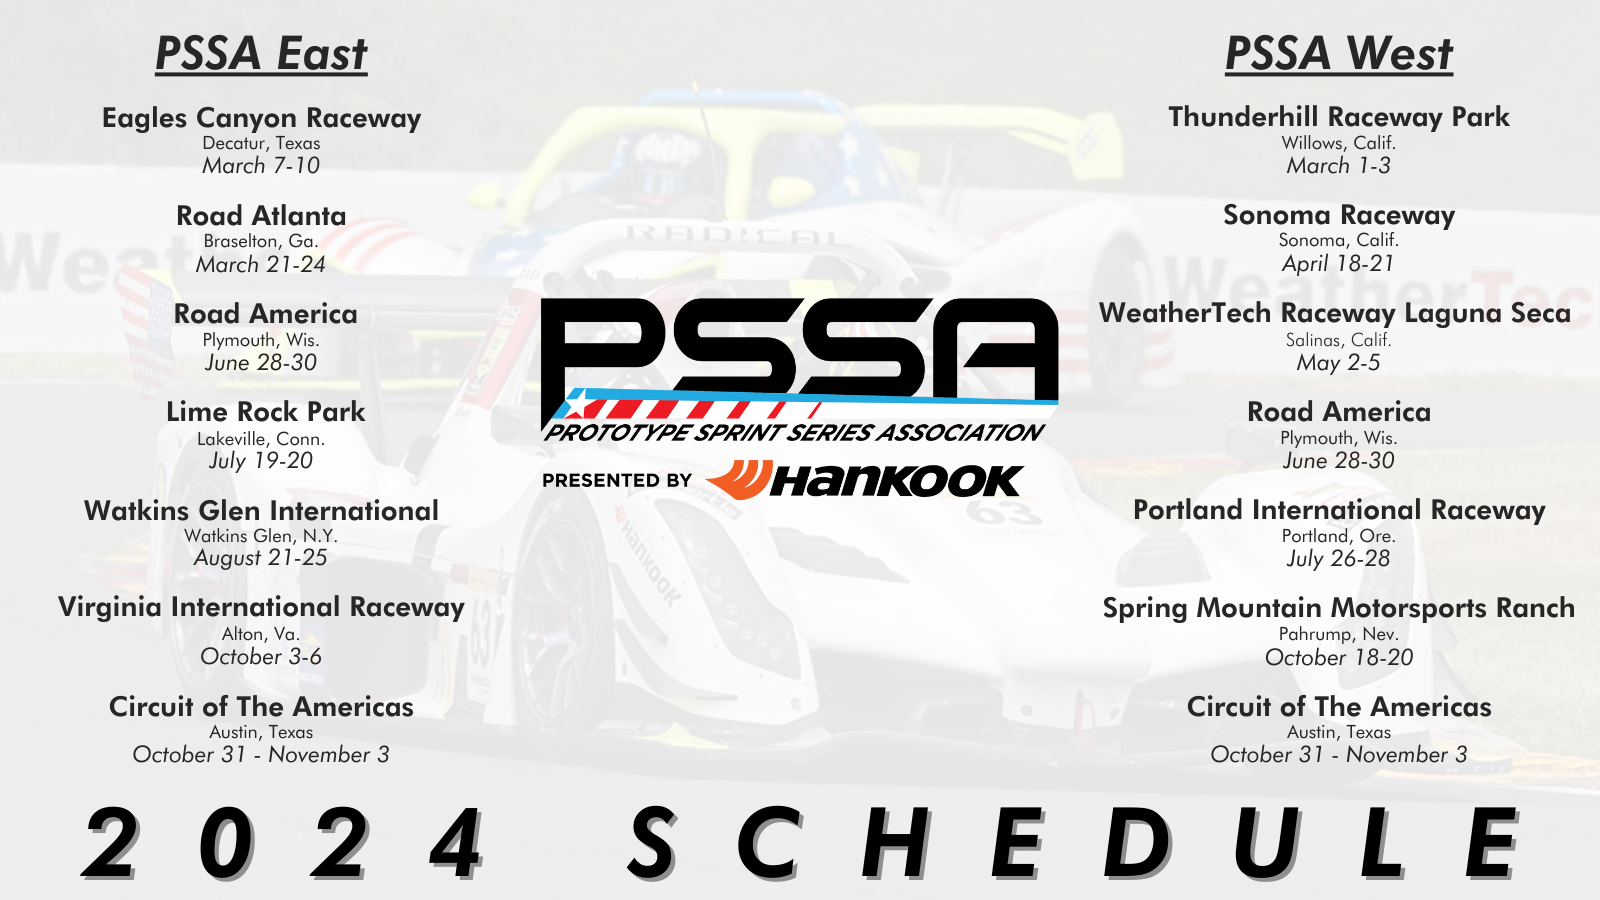 PSSA Announces 2024 Schedule Prototype Sprint Series Association